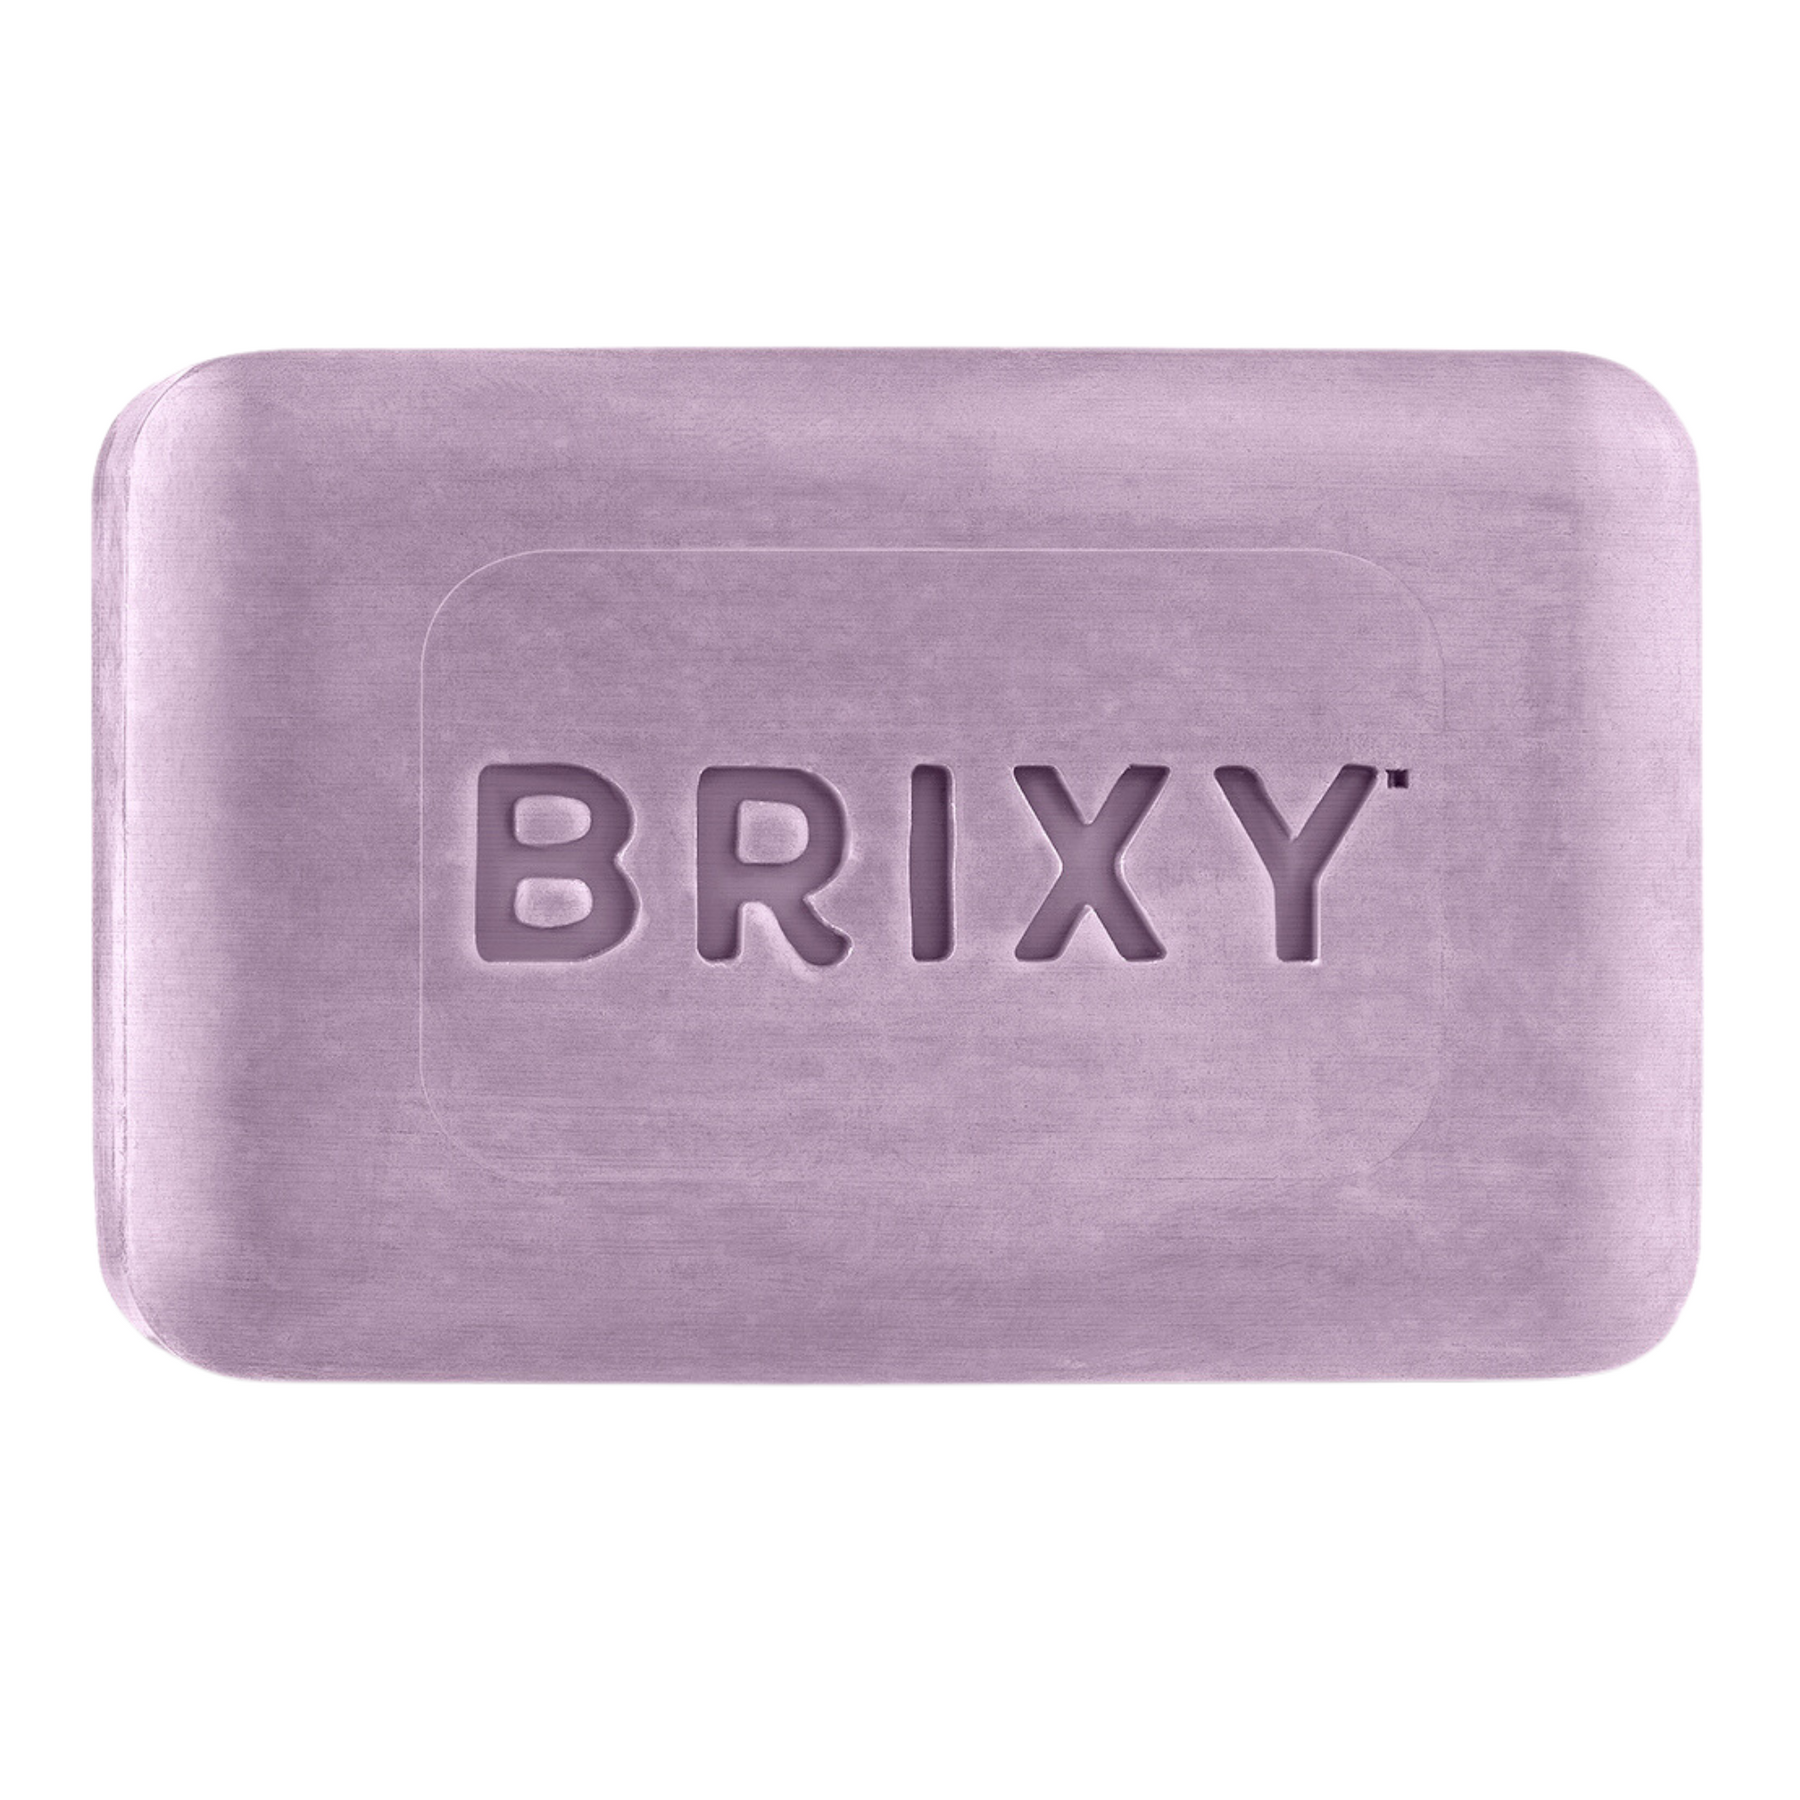 Brixy - Coconut Vanilla Body Wash Bar